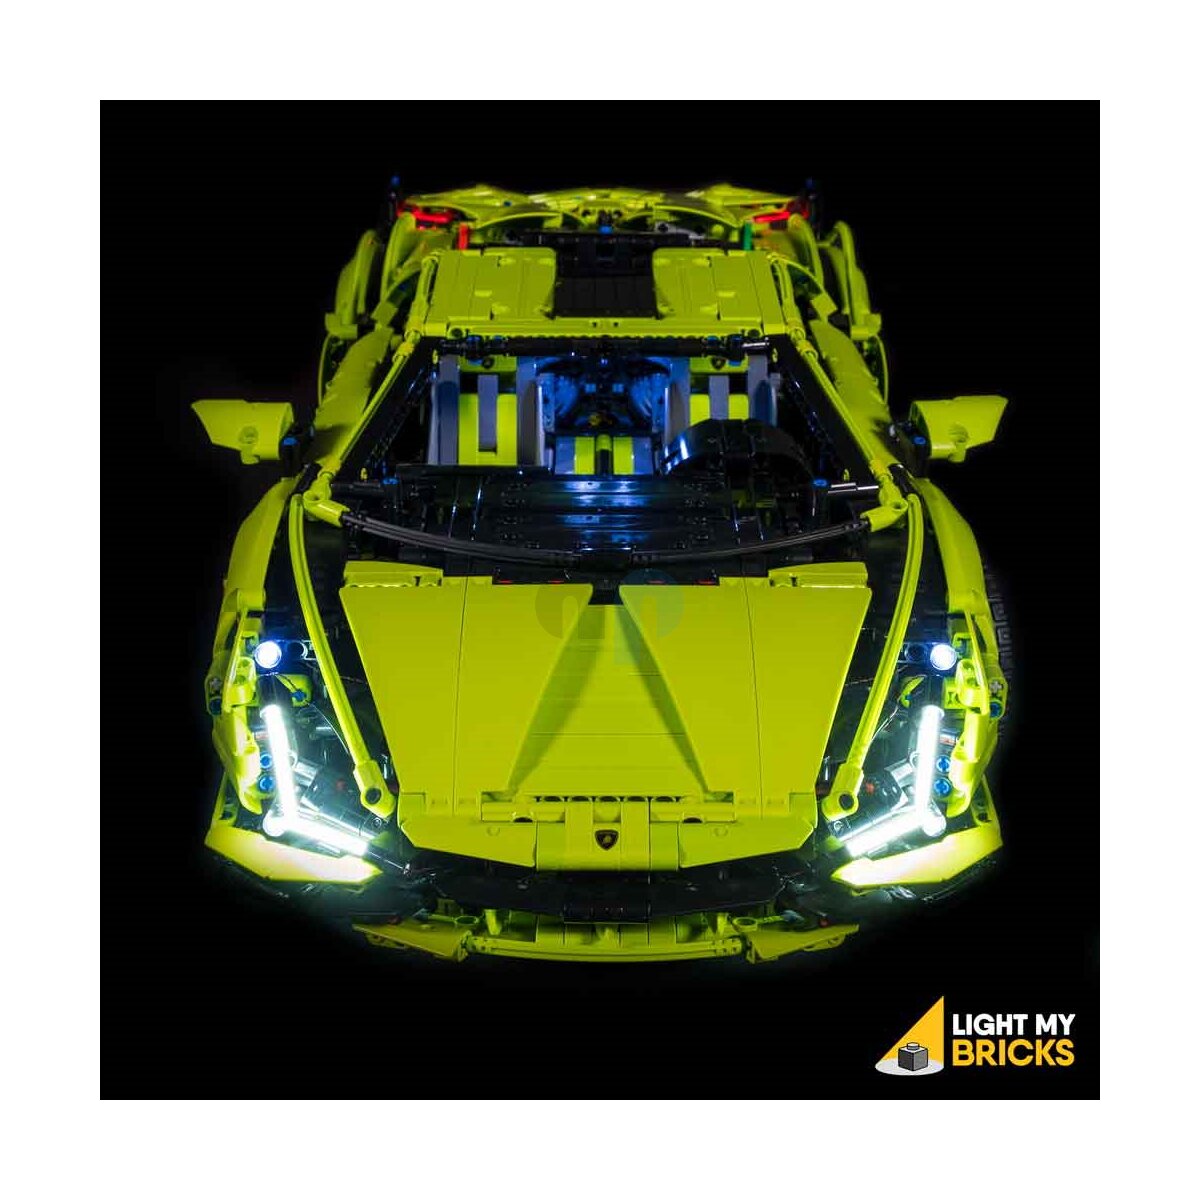 DIY LED Licht Beleuchtung Set Für lego 42115 Für Lamborghini Sian Fkp 37 Auto r 